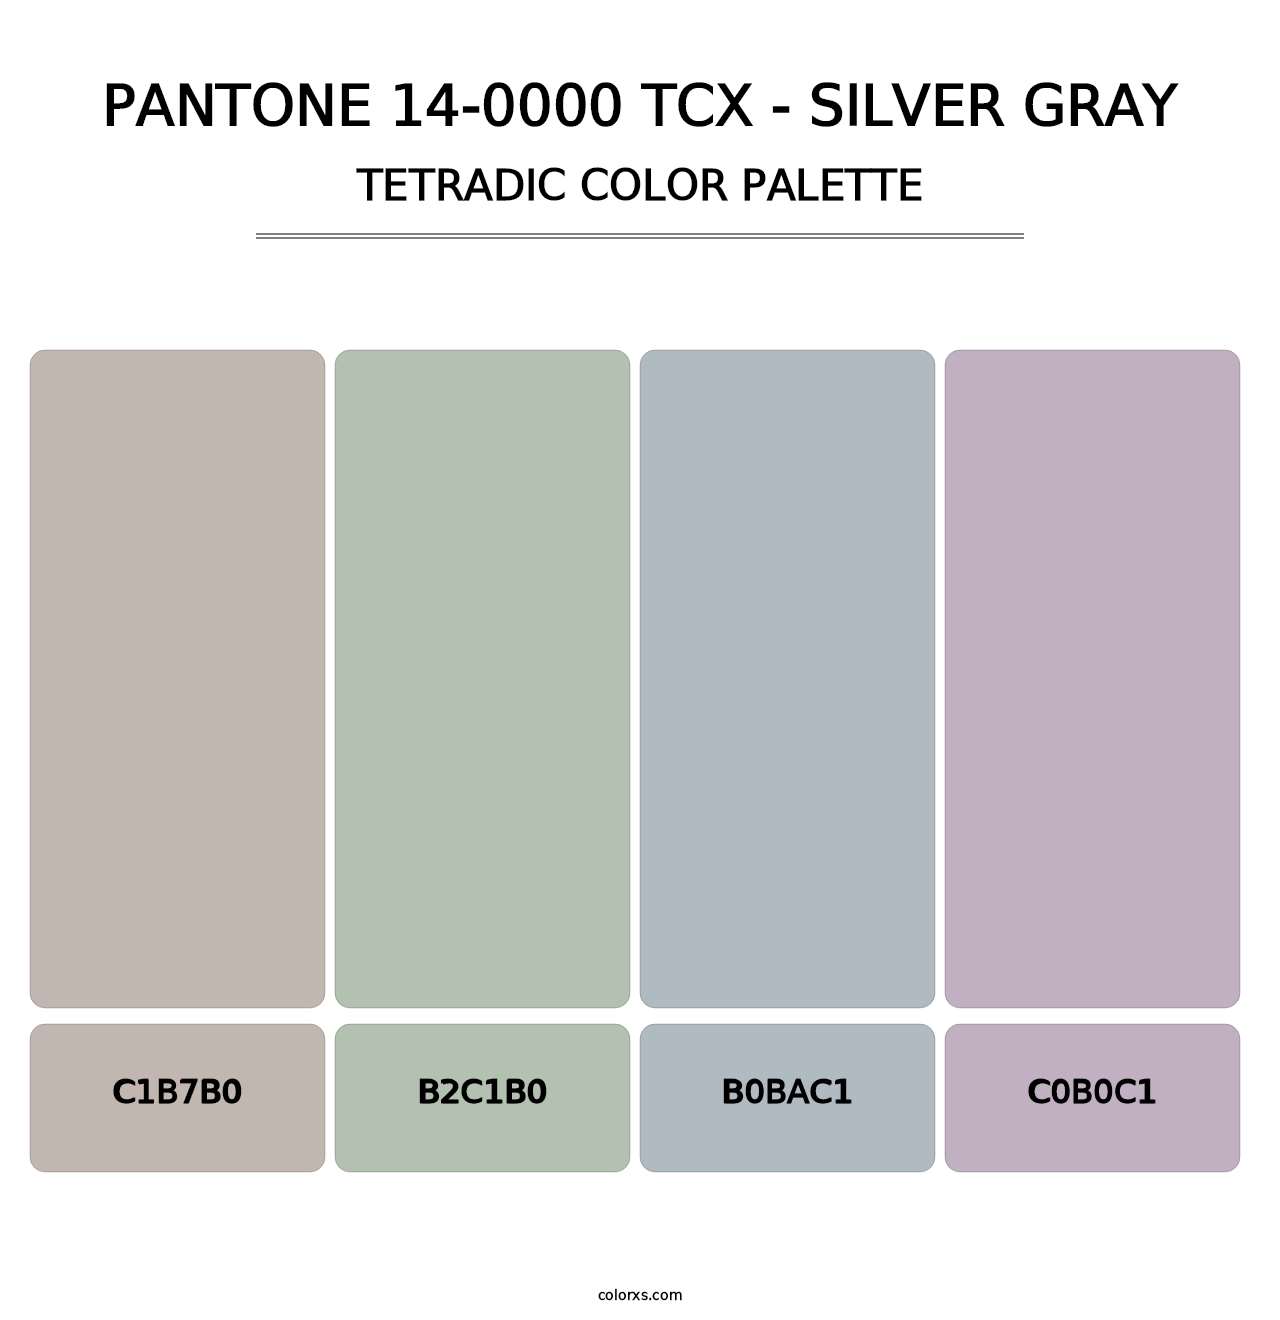 PANTONE 14-0000 TCX - Silver Gray - Tetradic Color Palette